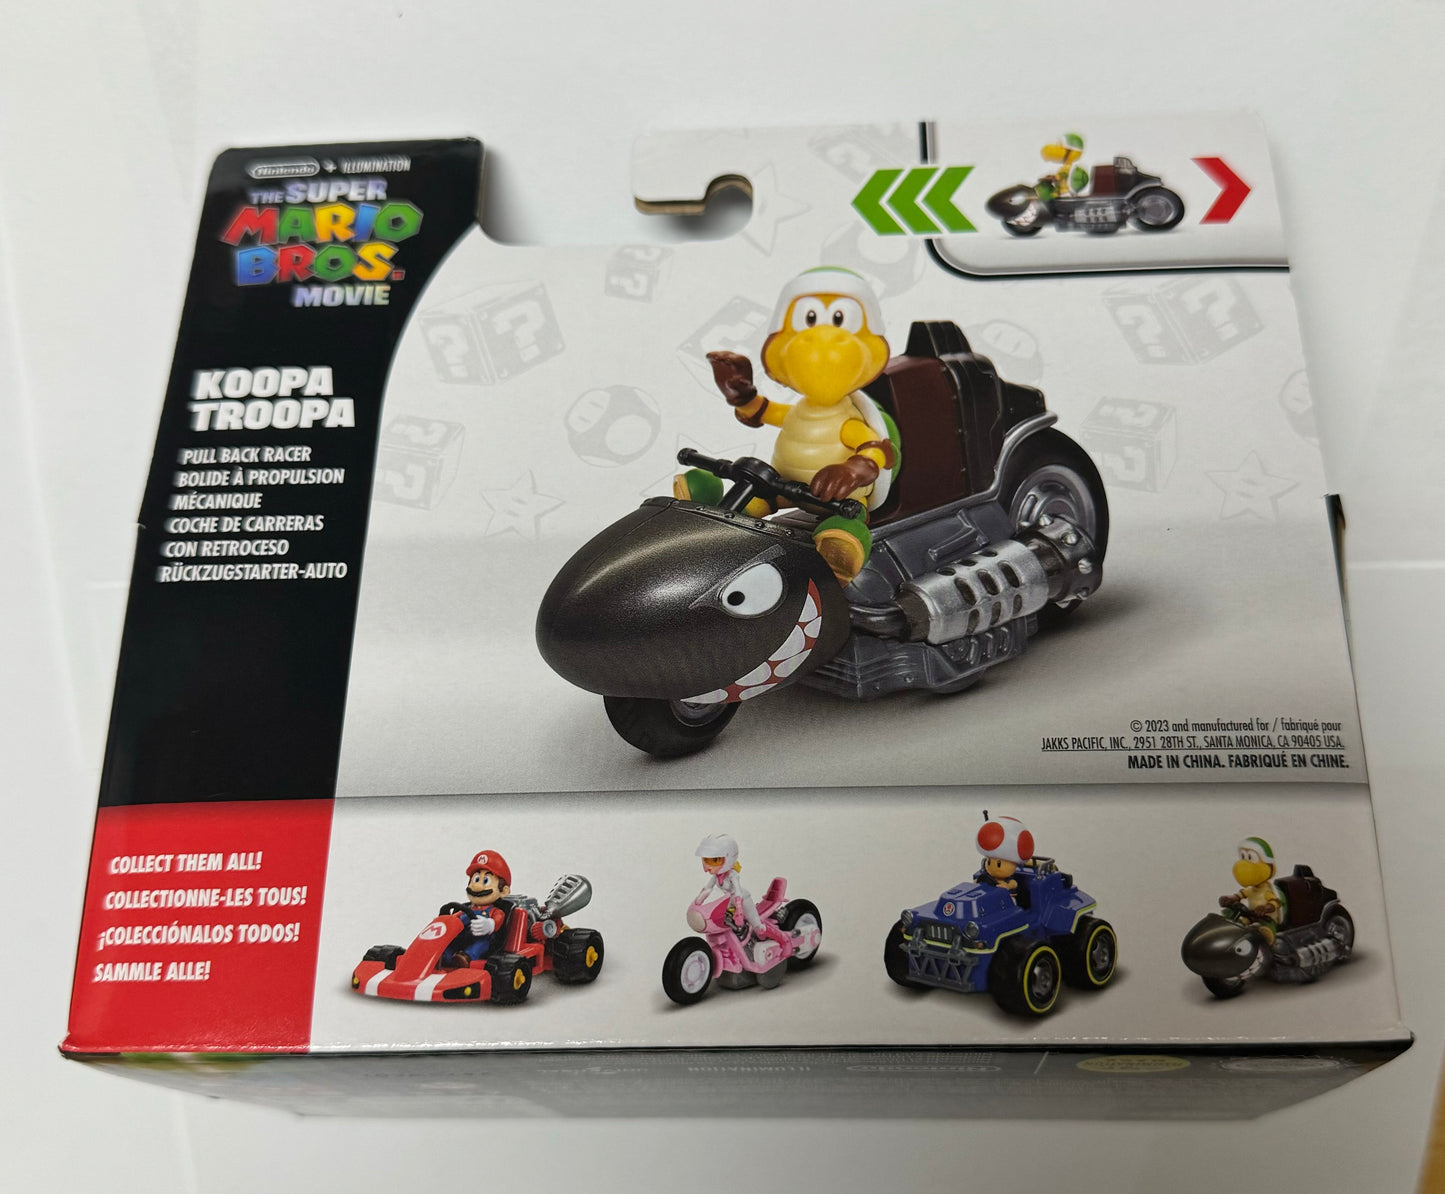 Jakks Super Mario Bros. The Movie. Koopa Troopa 2.5" Inch Racer Figure